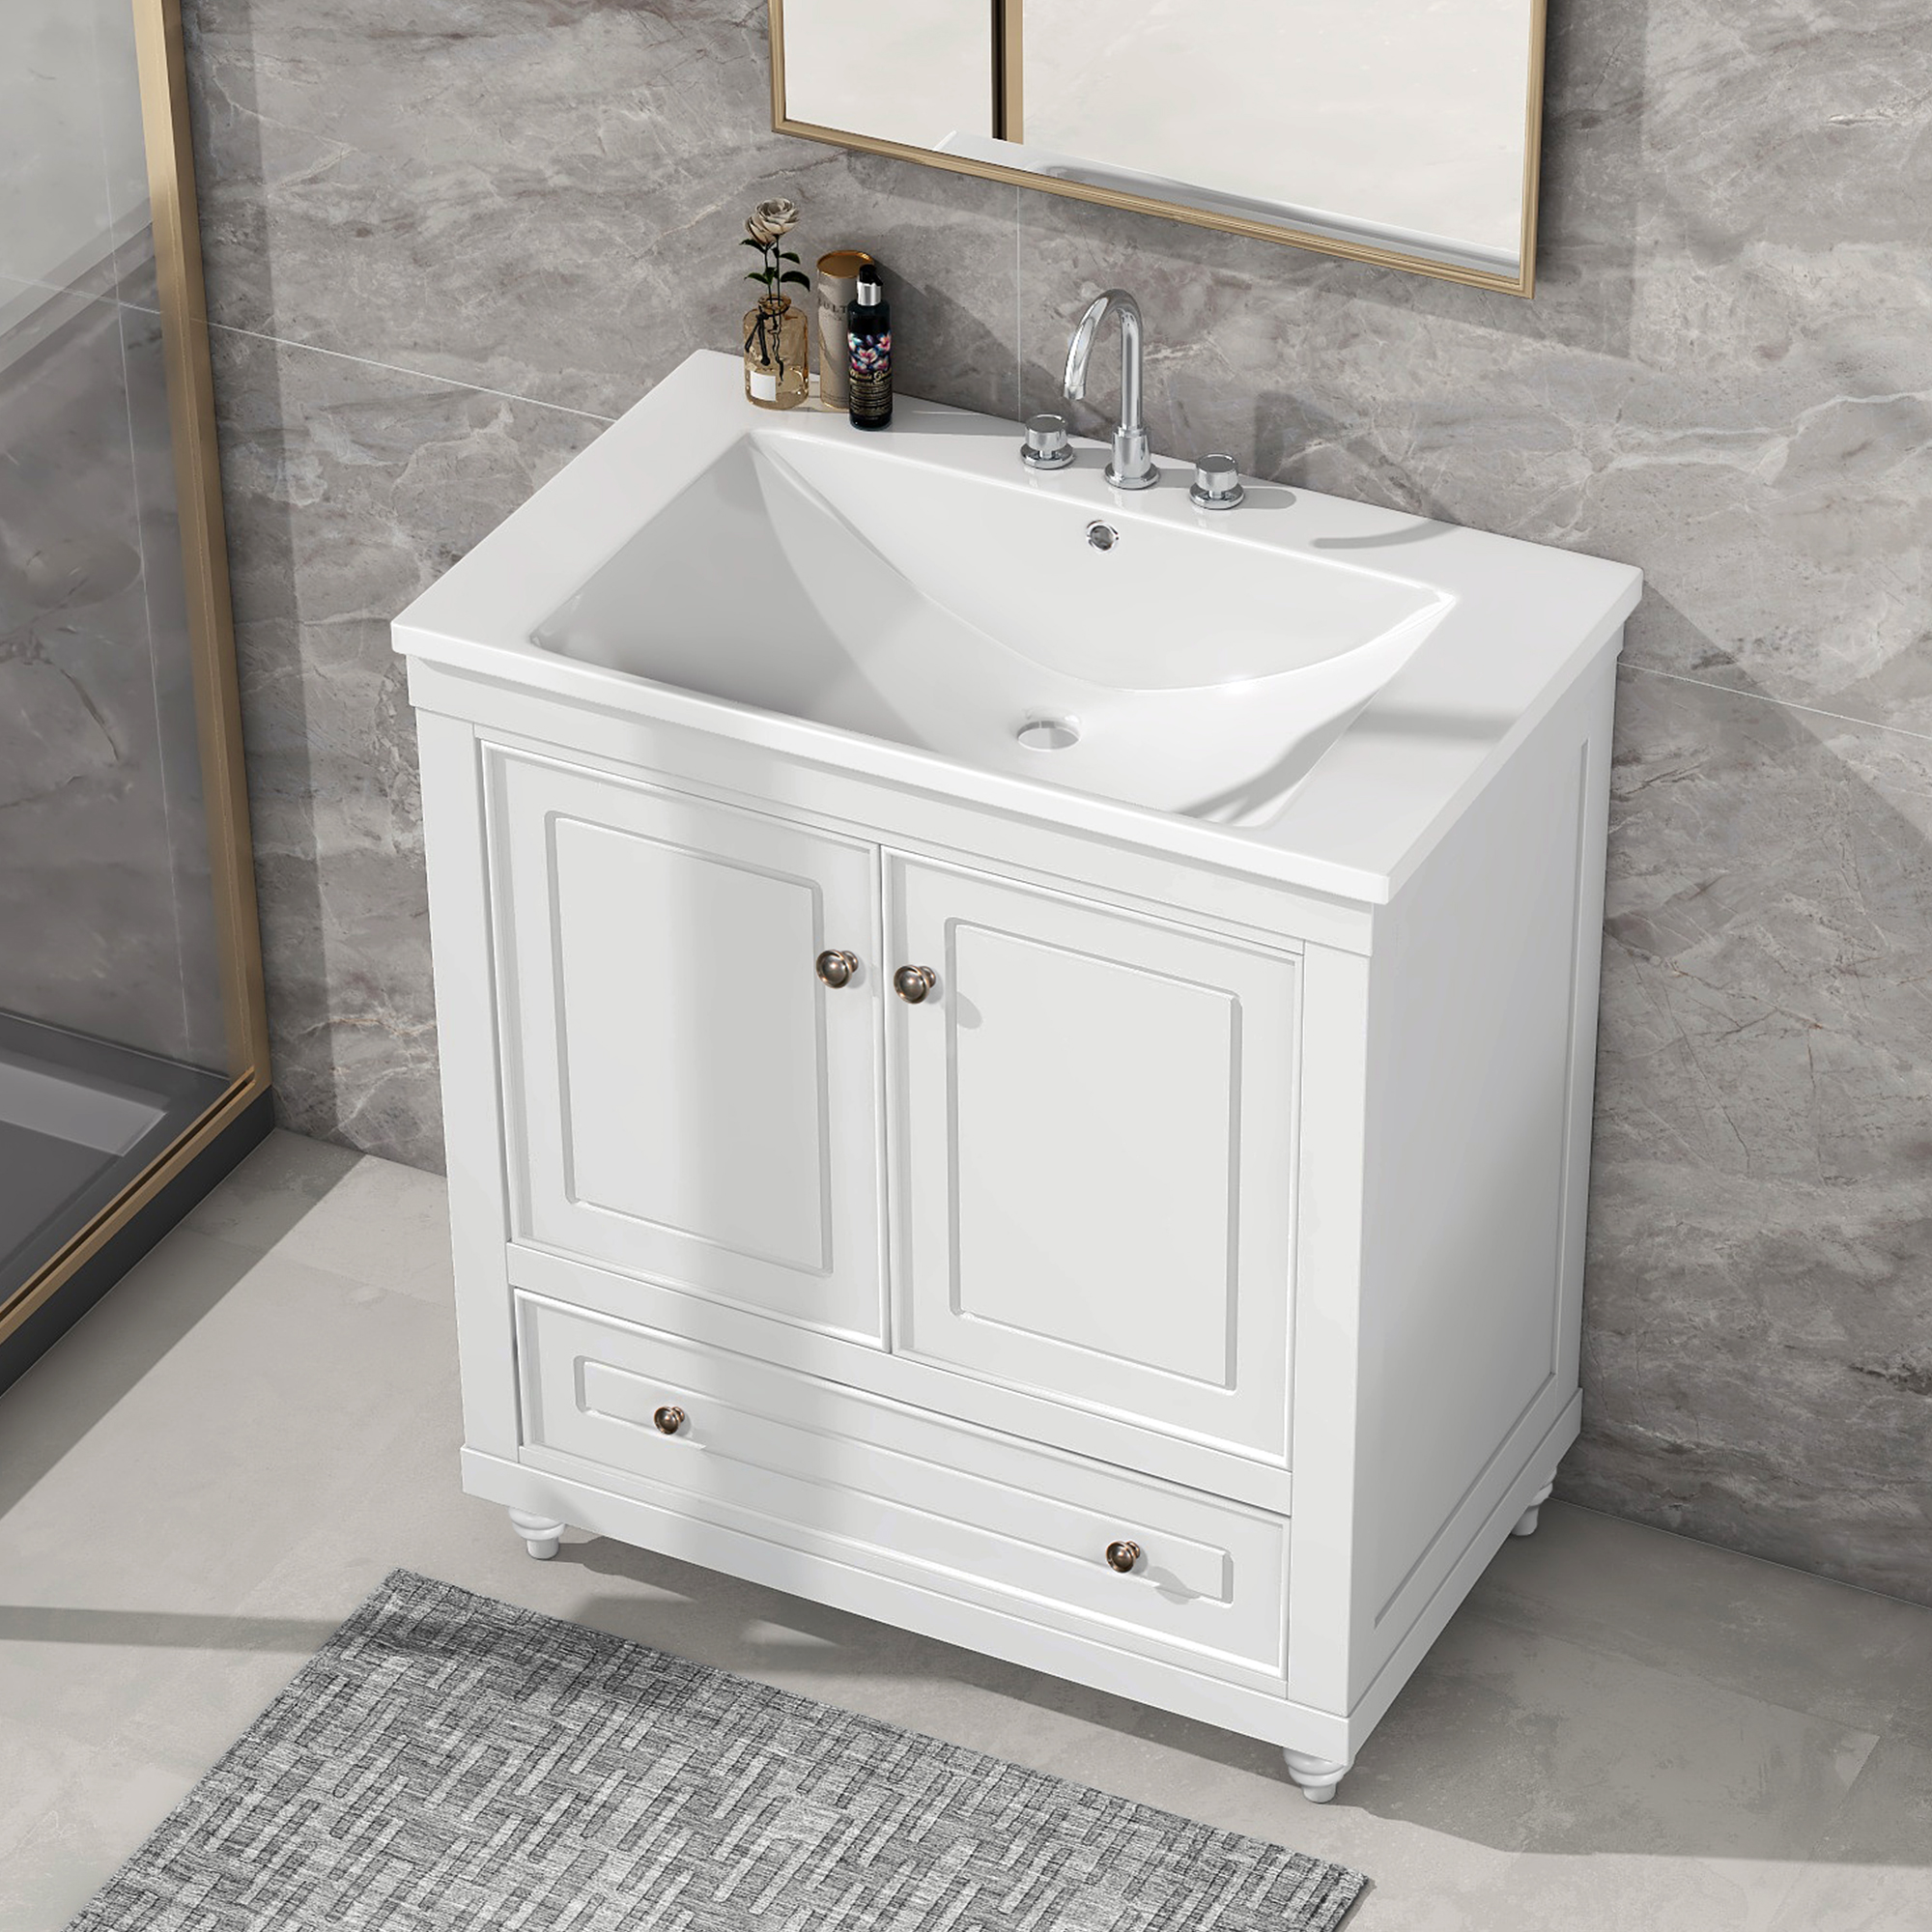 30 Inches Bathroom Vanity With Sink - JL000006AAK